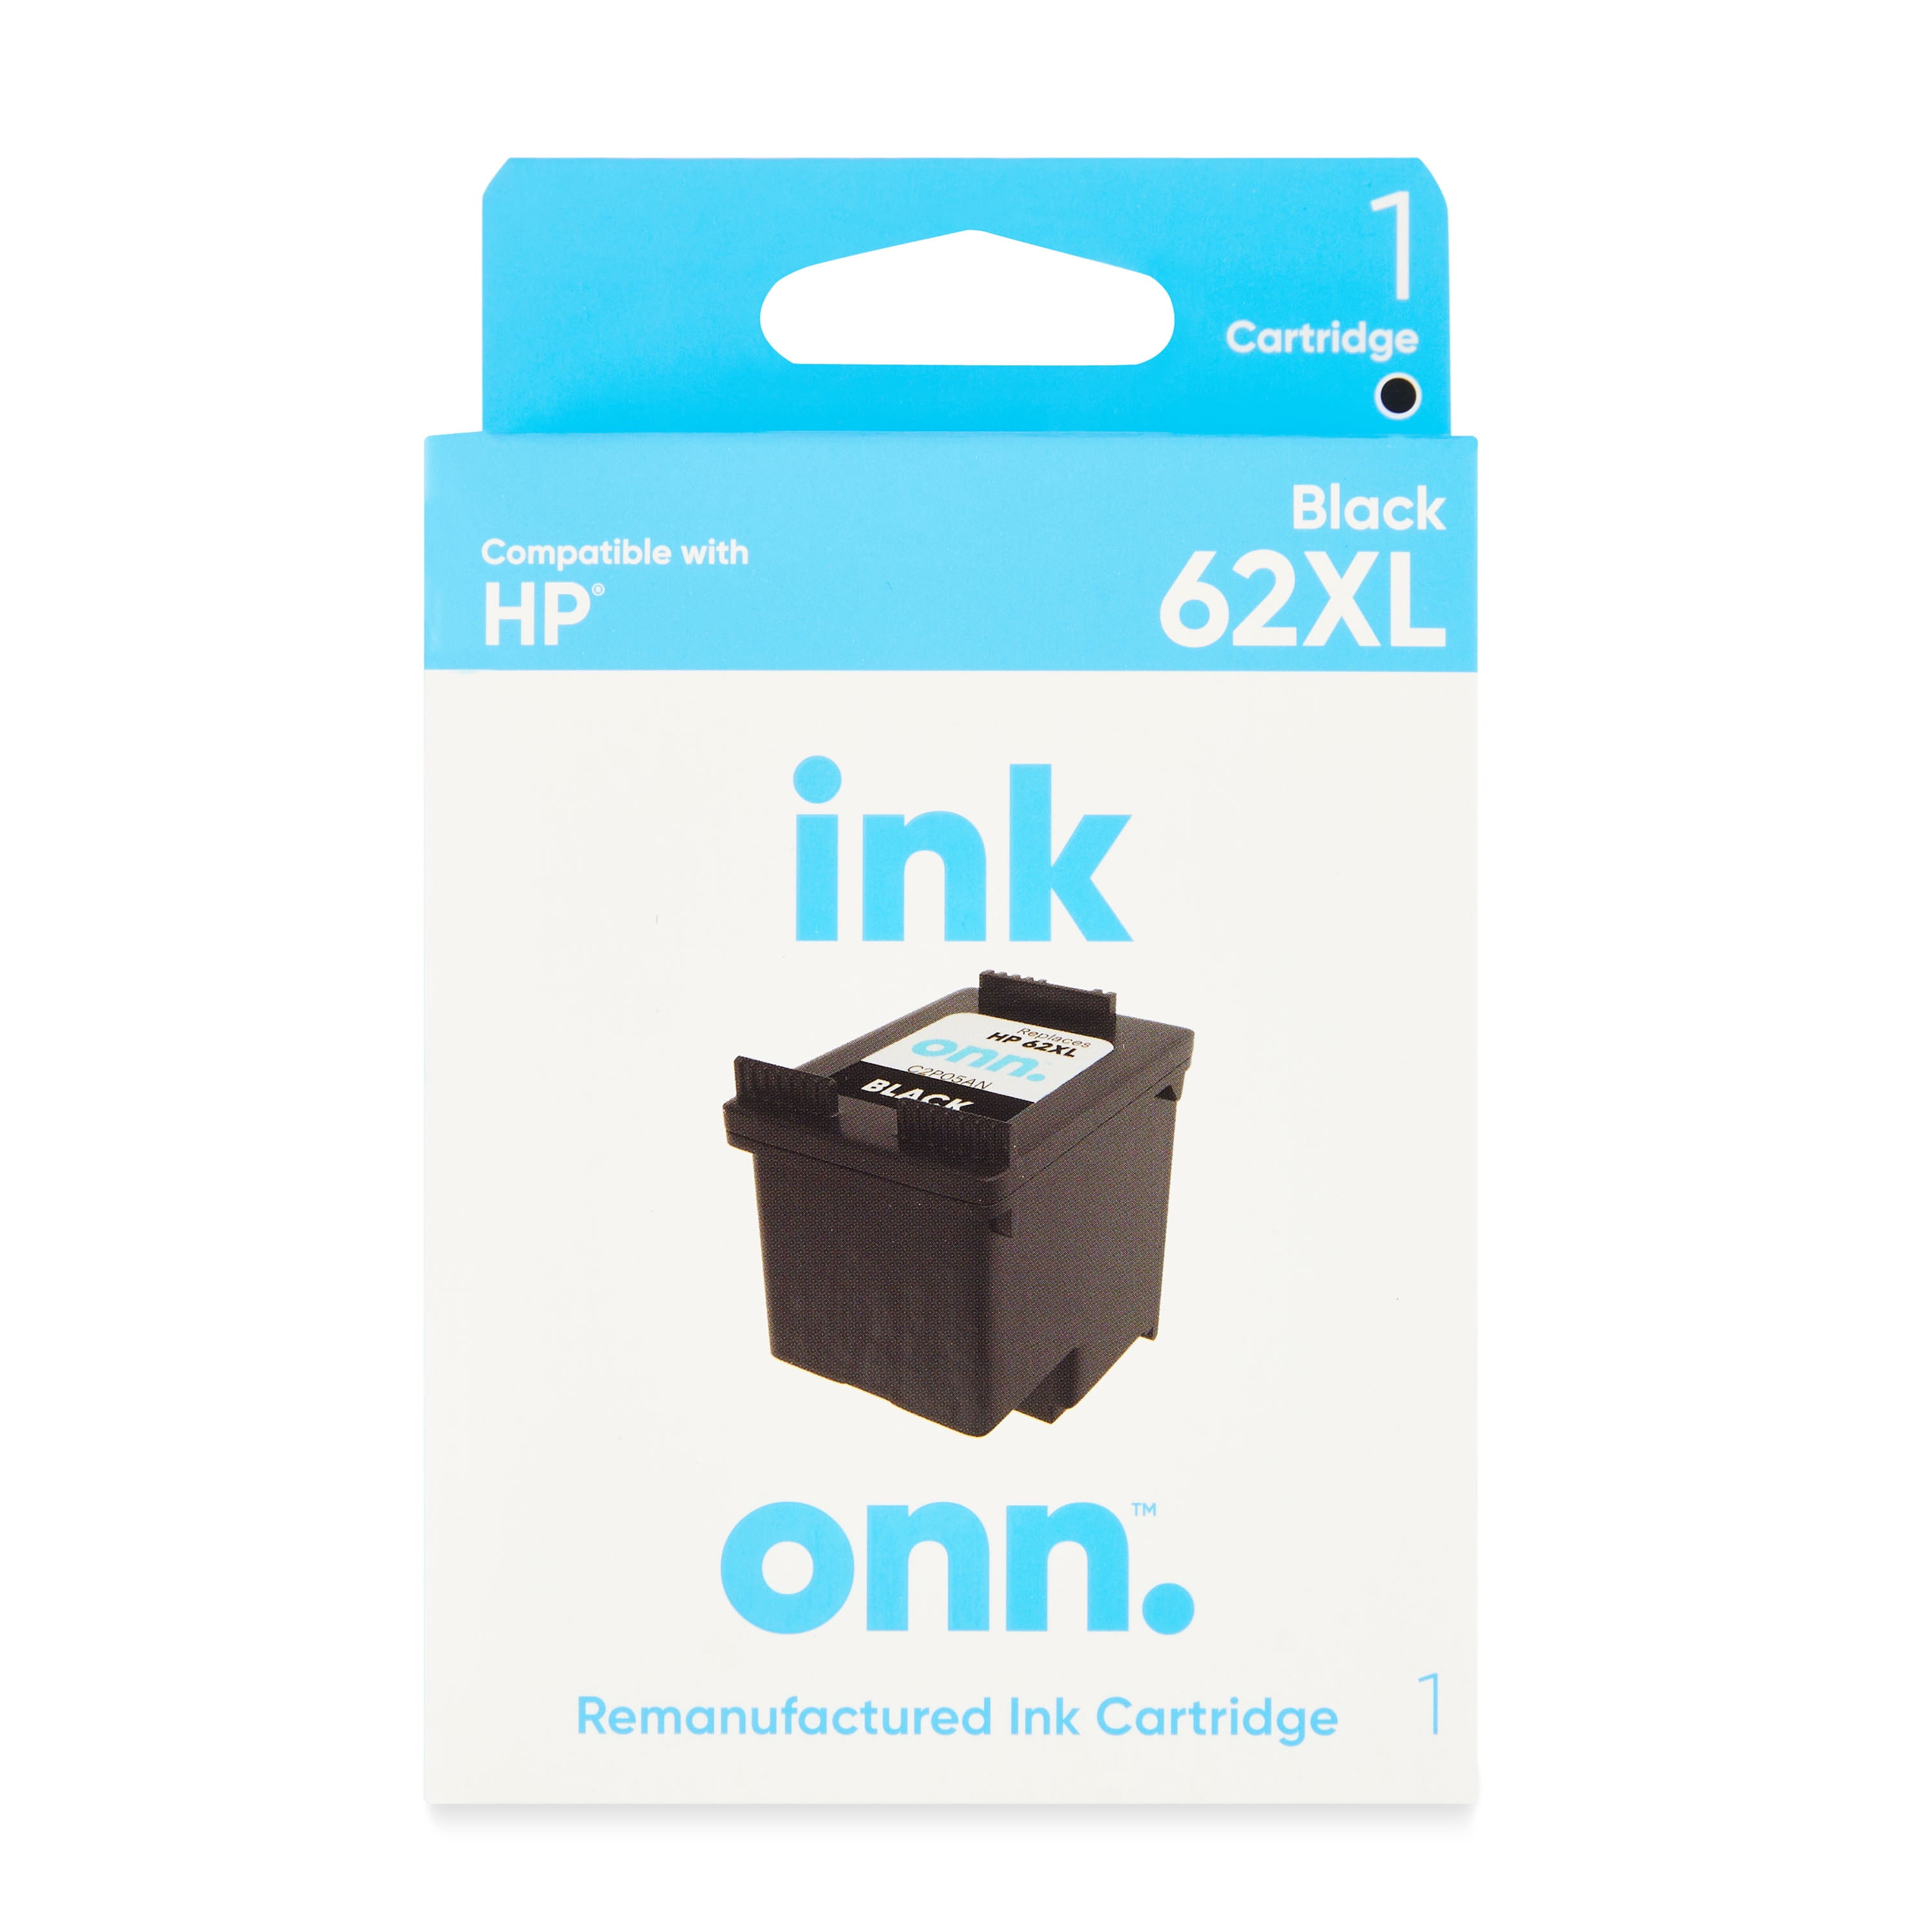 onn. Remanufactured Ink Cartridge, HP 62XL Black, 1 Cartridge